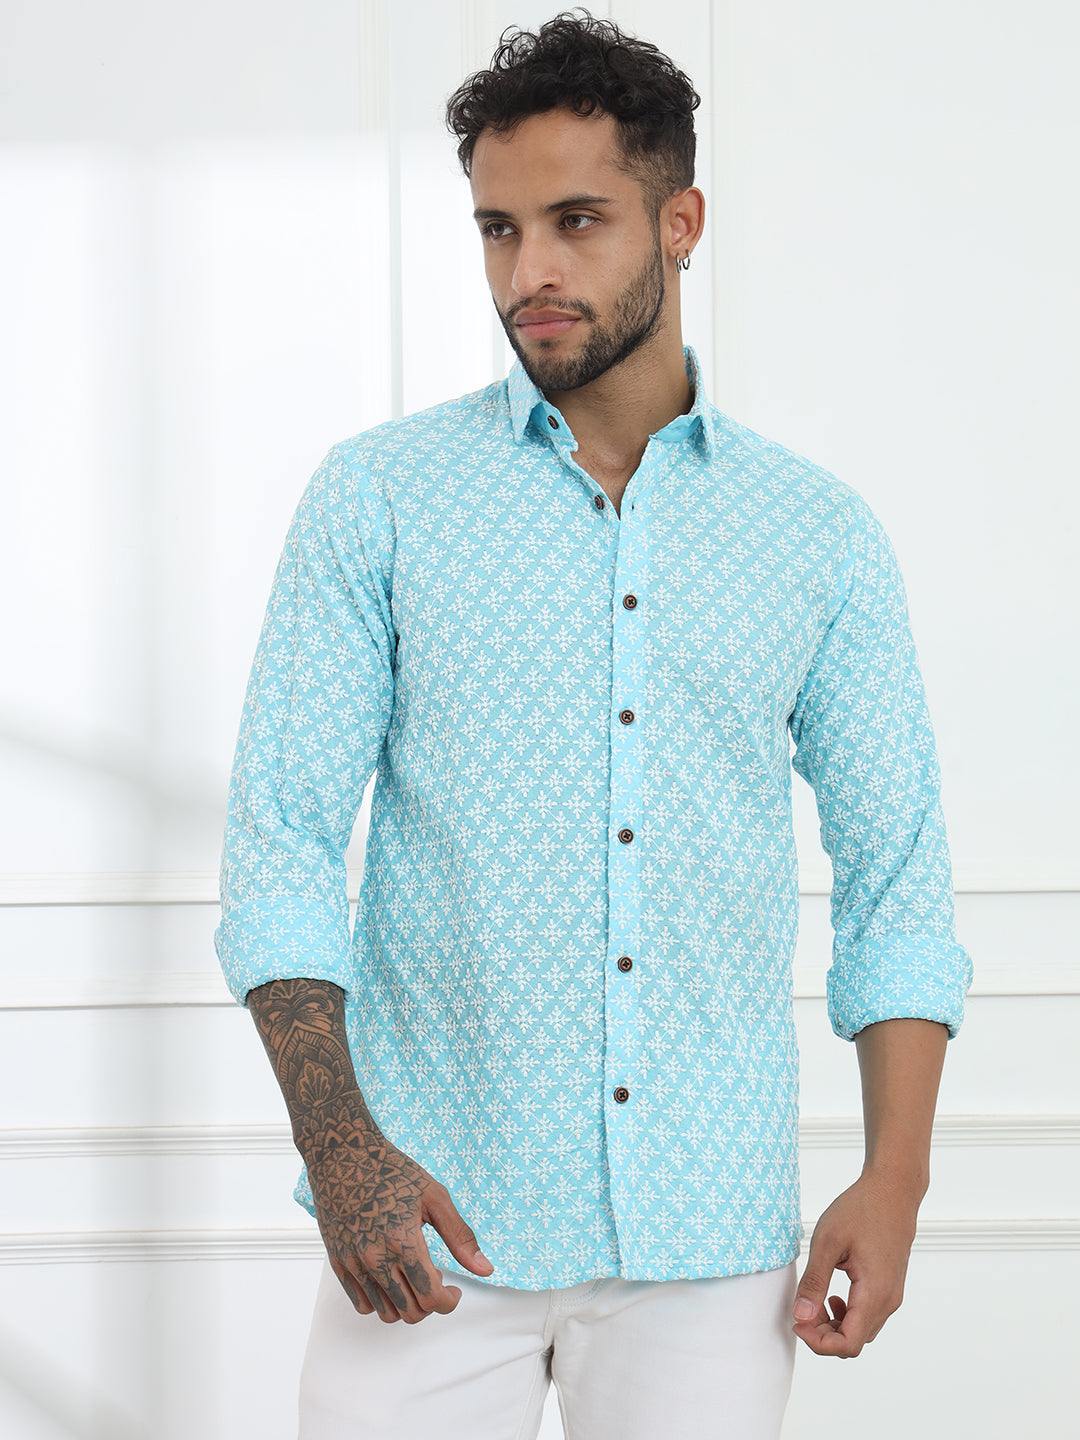 Firangi Yarn Super Soft Full Sleeves Chikankari schiffli Embroided Men's Shirt Sky Blue